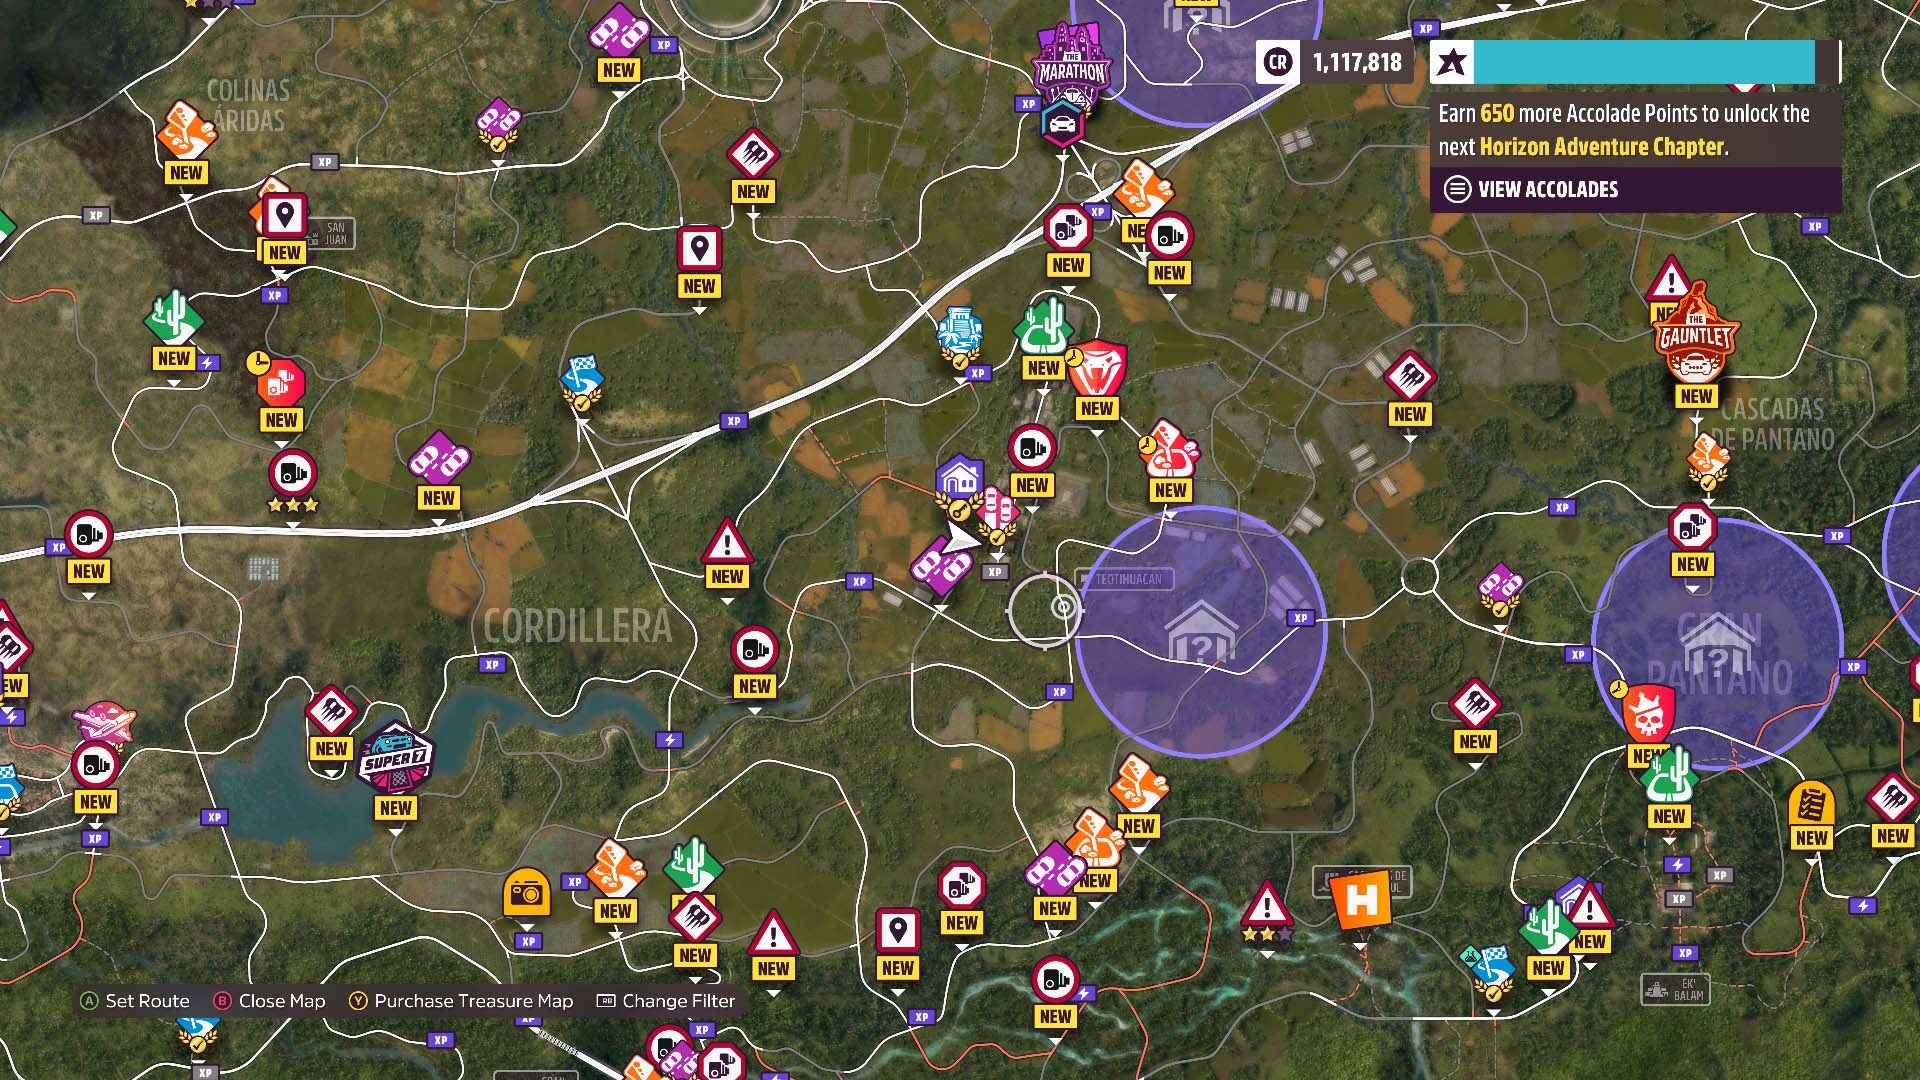 Forza Horizon 5 Map Creators, Build Your Next Masterpiece with